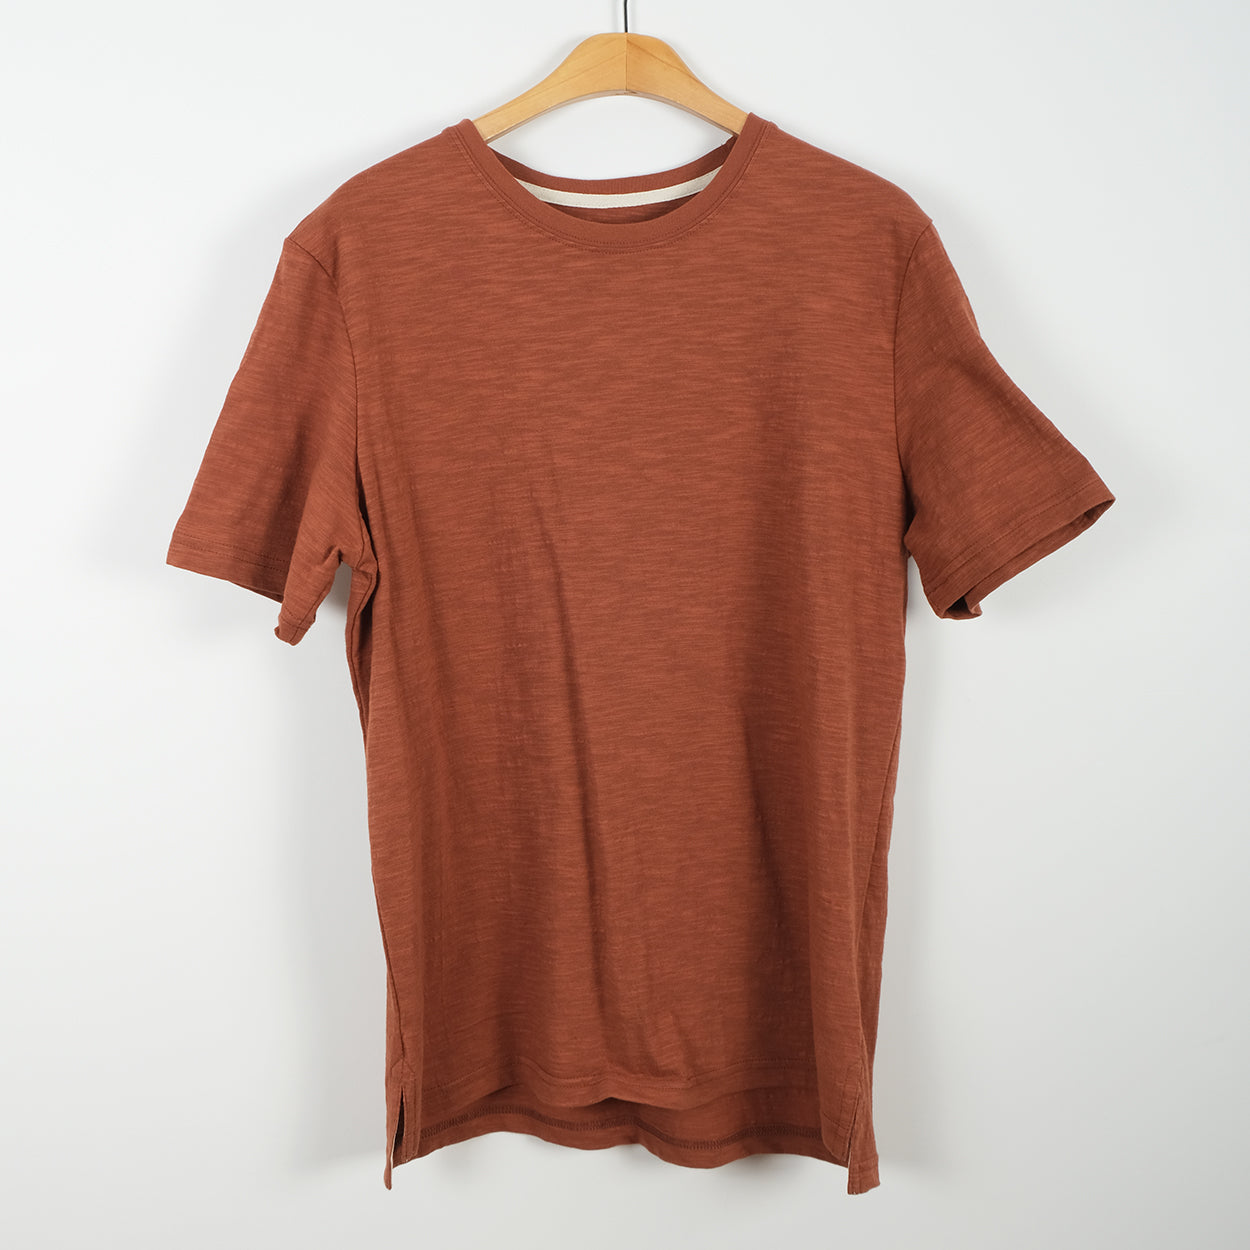 L - Terracotta Slub S/S T-Shirt